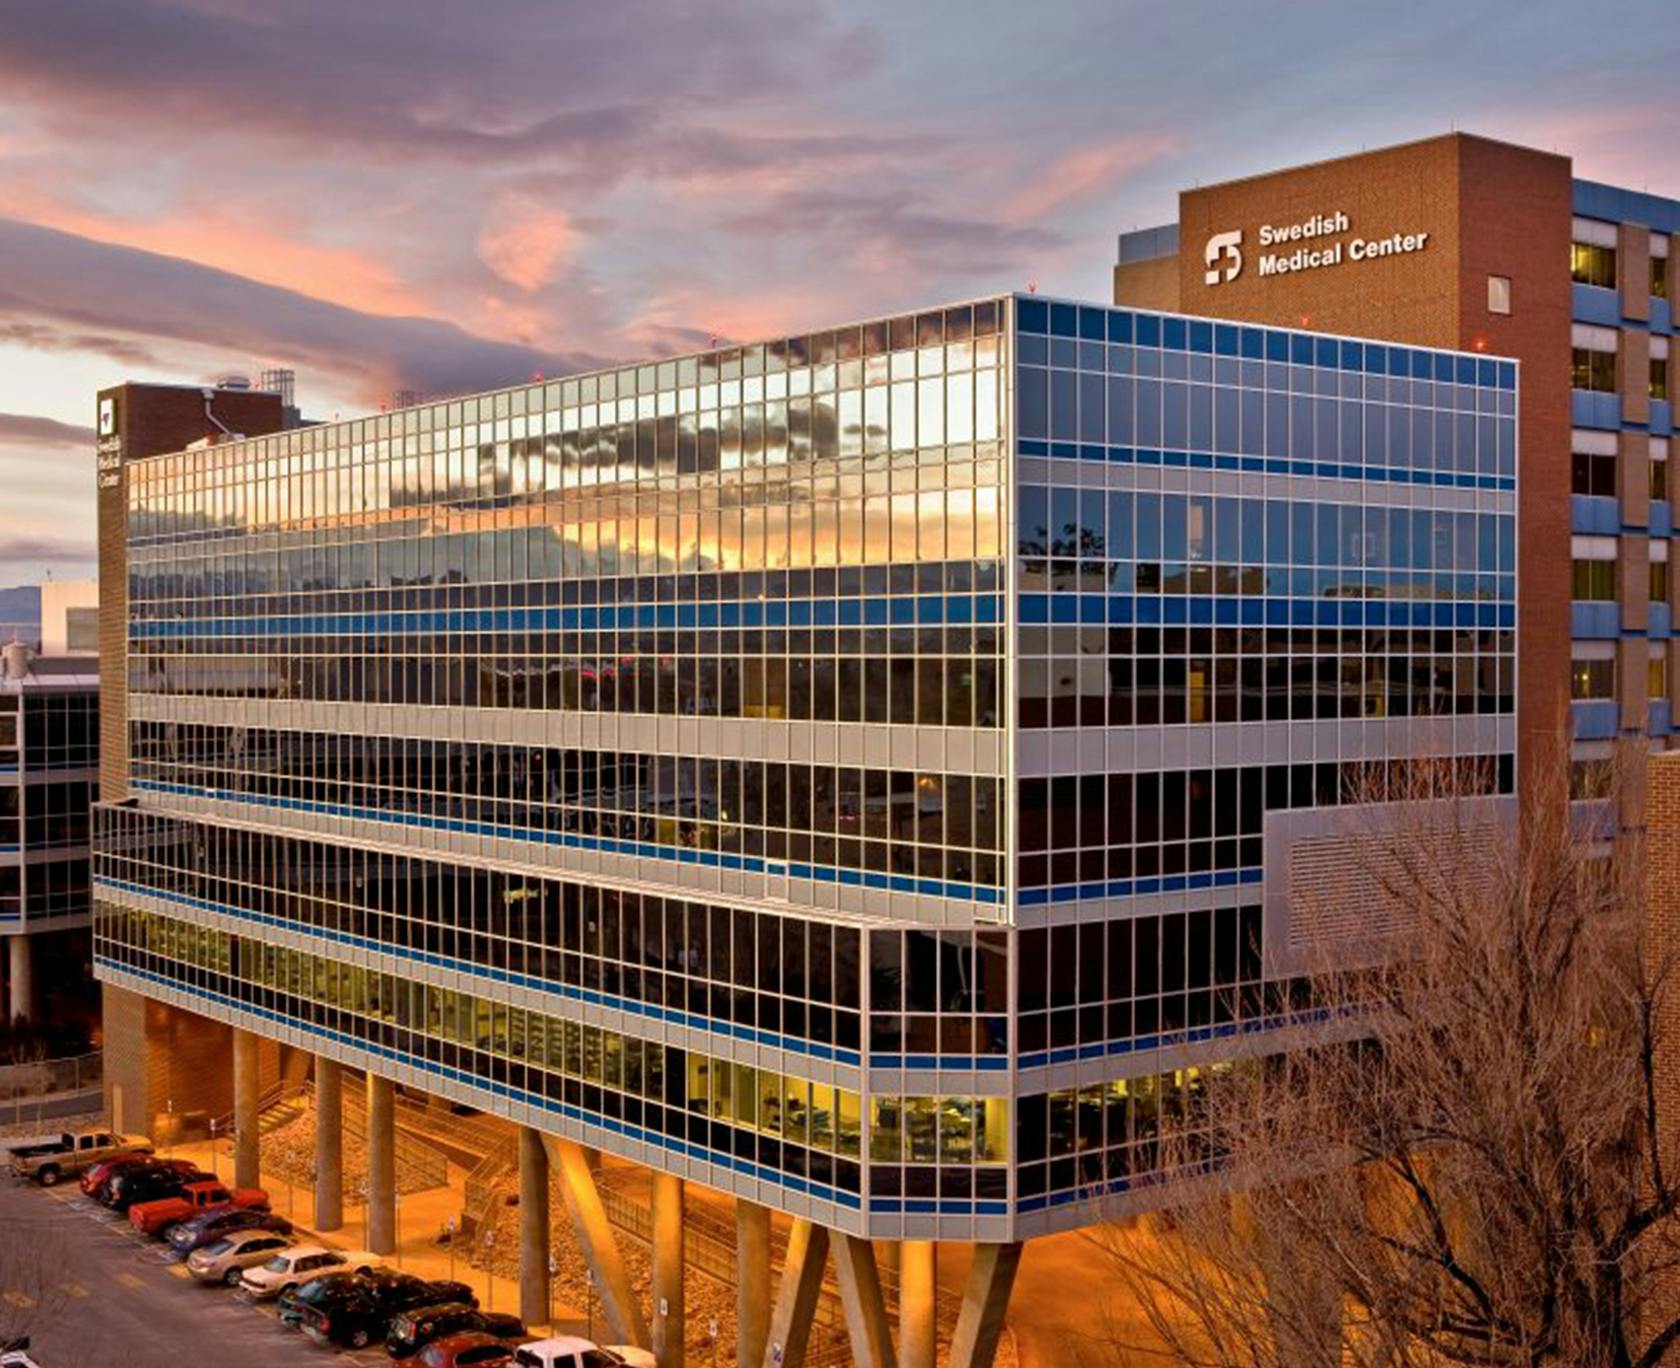 Swedish Medical Center building in sunset